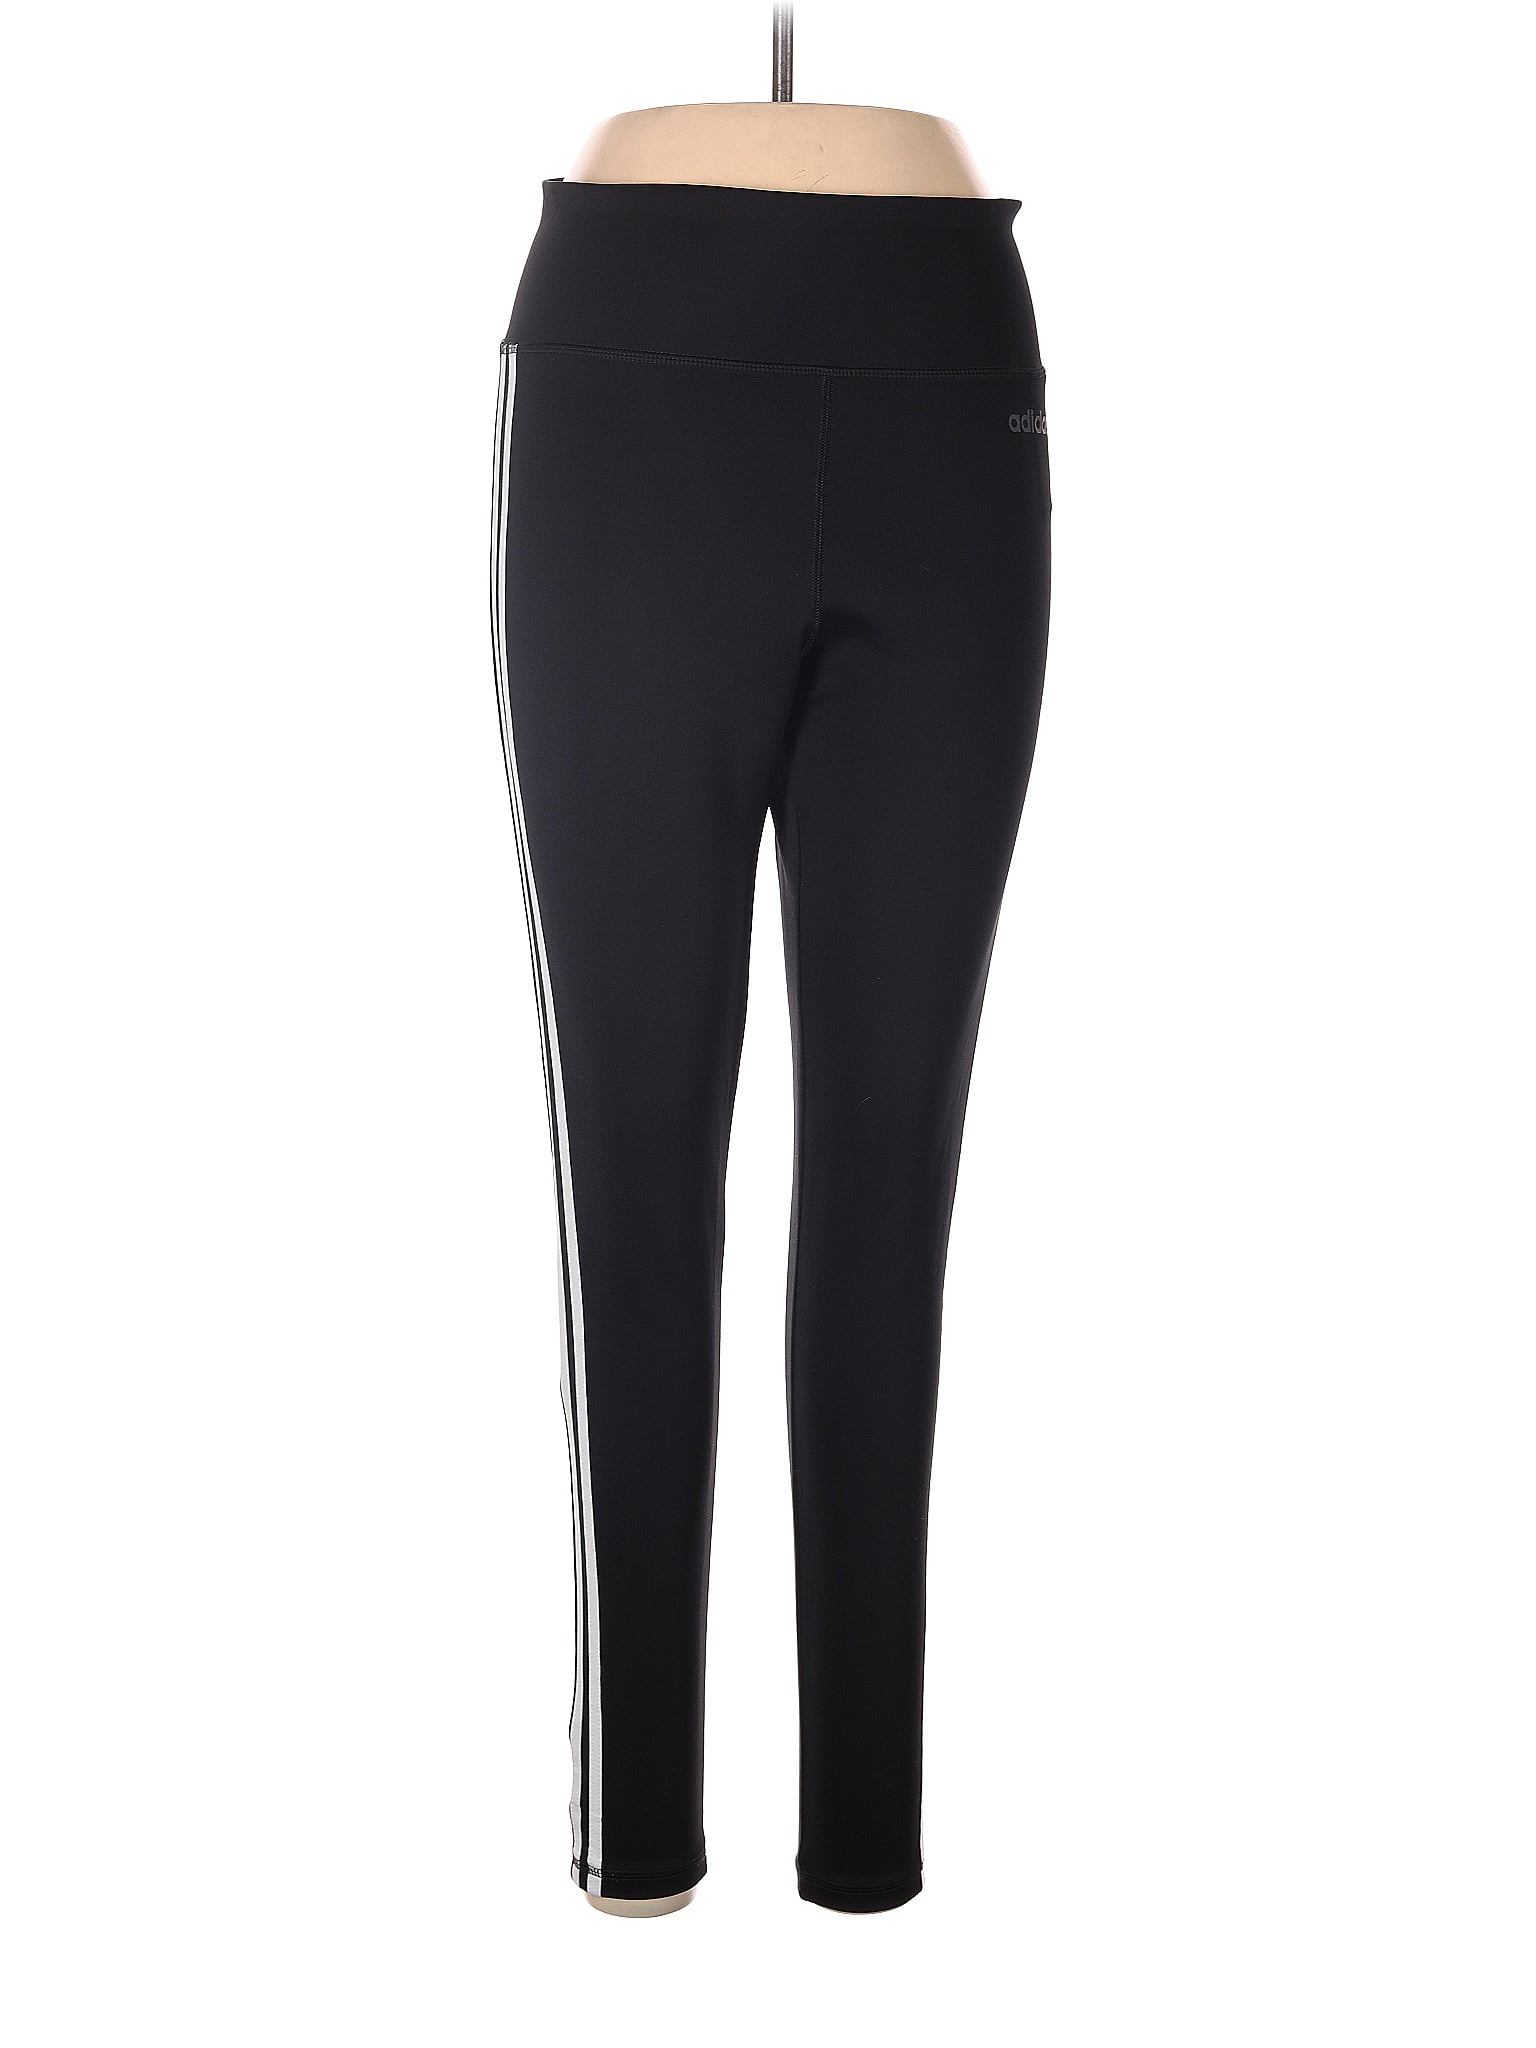 colorfulkoala Black Active Pants Size M - 52% off